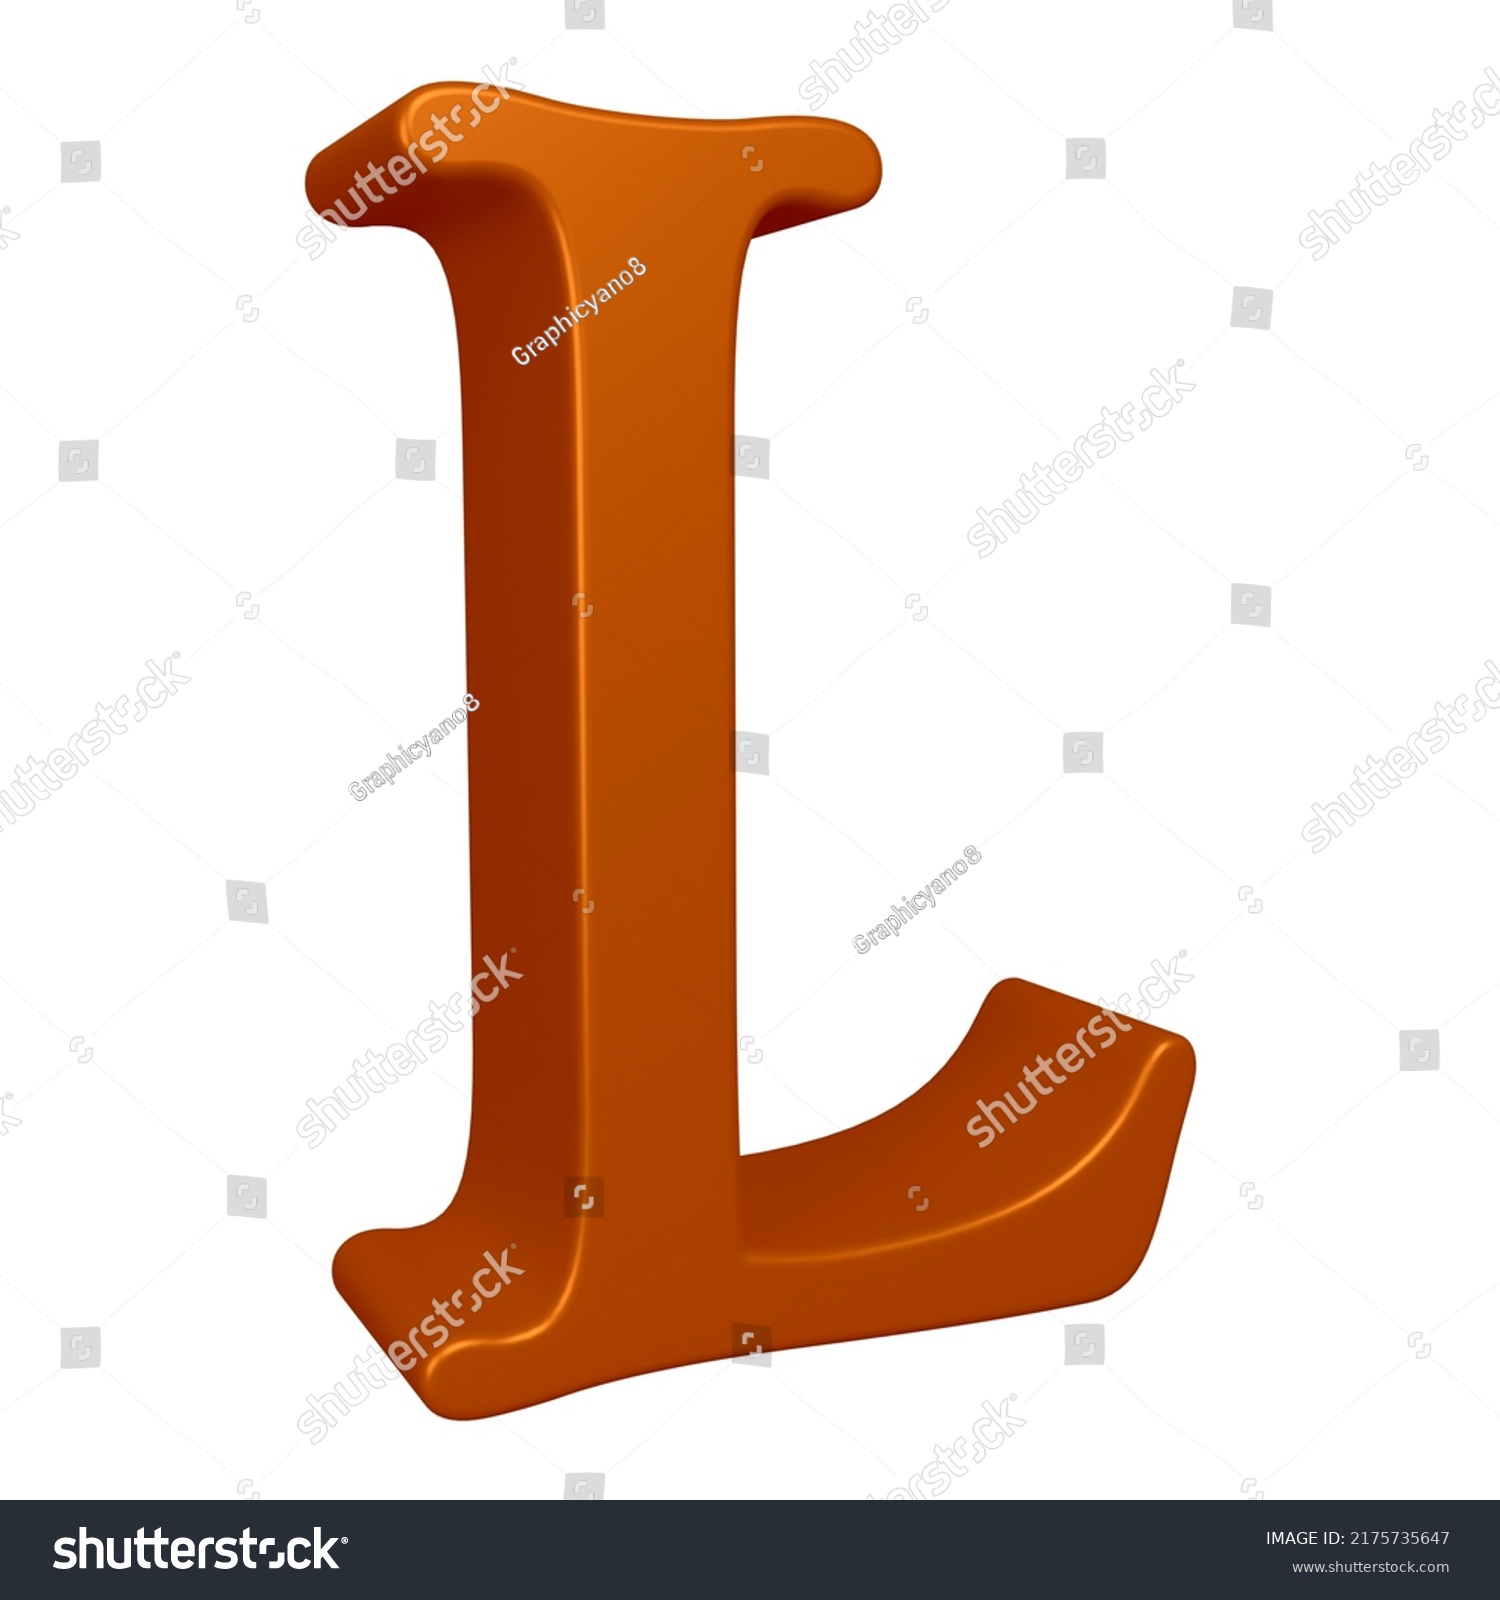 Letter L 3d Render Alphabet Letters Stock Illustration 2175735647 ...